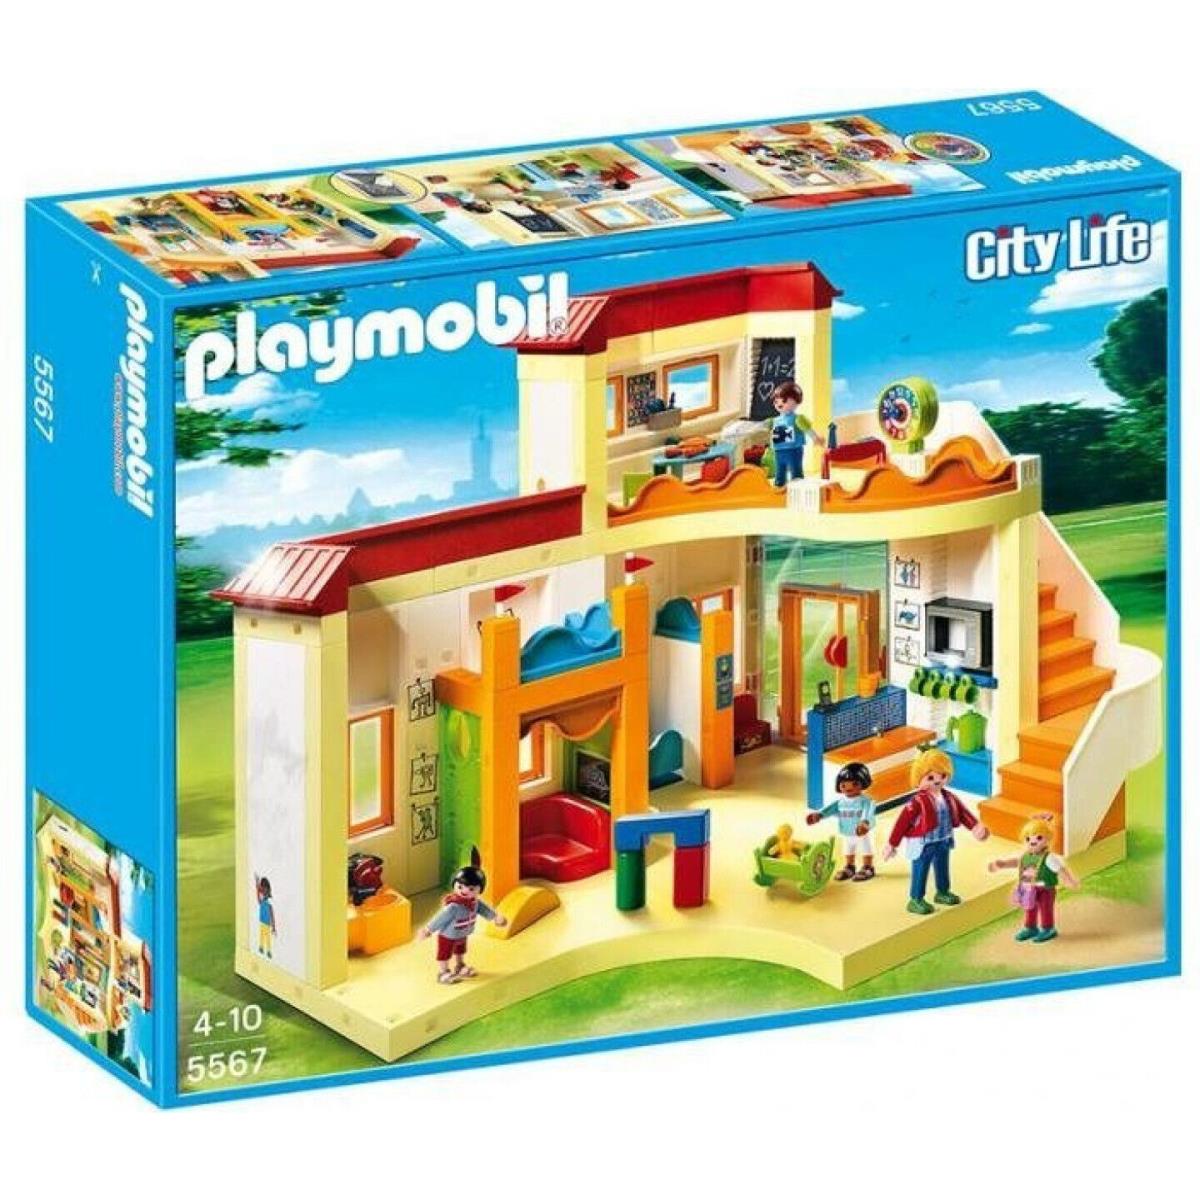 Playmobil City Life 5567 Sunshine Preschool For Children Ages 4+